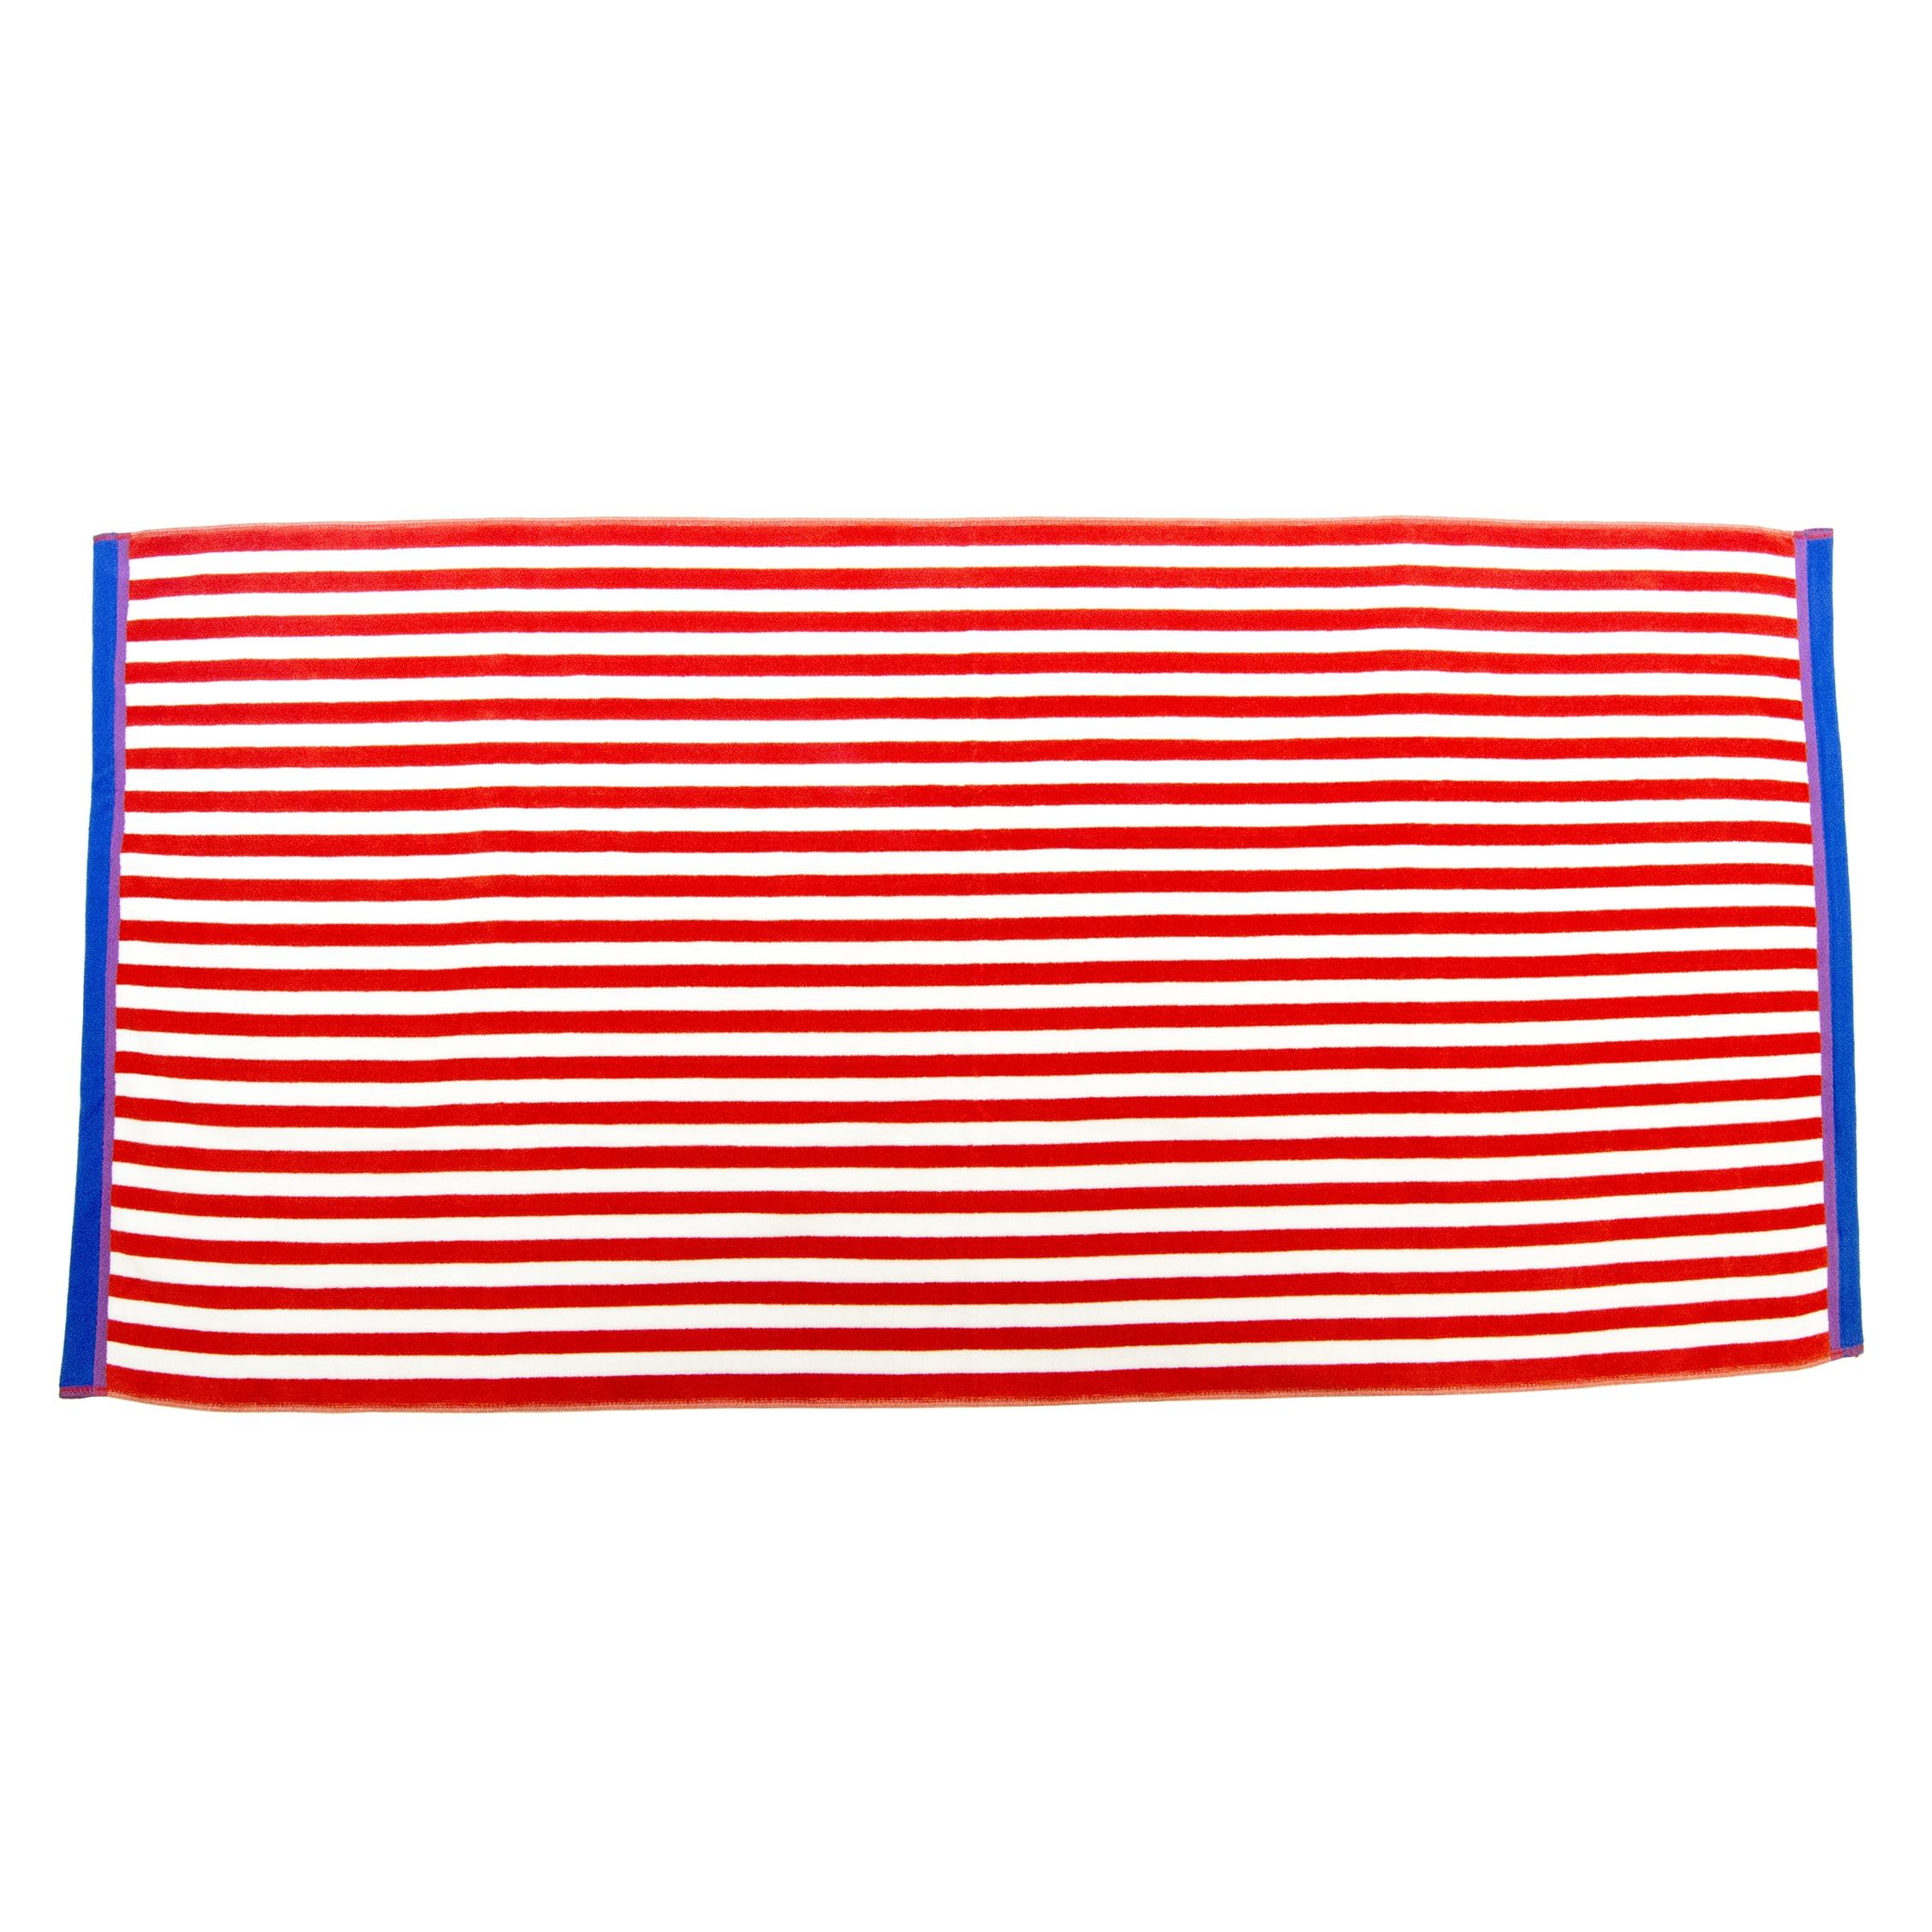 Red Striped Pool / Beach Towel 100% Cotton 75x150cm Large Stripe Bath Towels